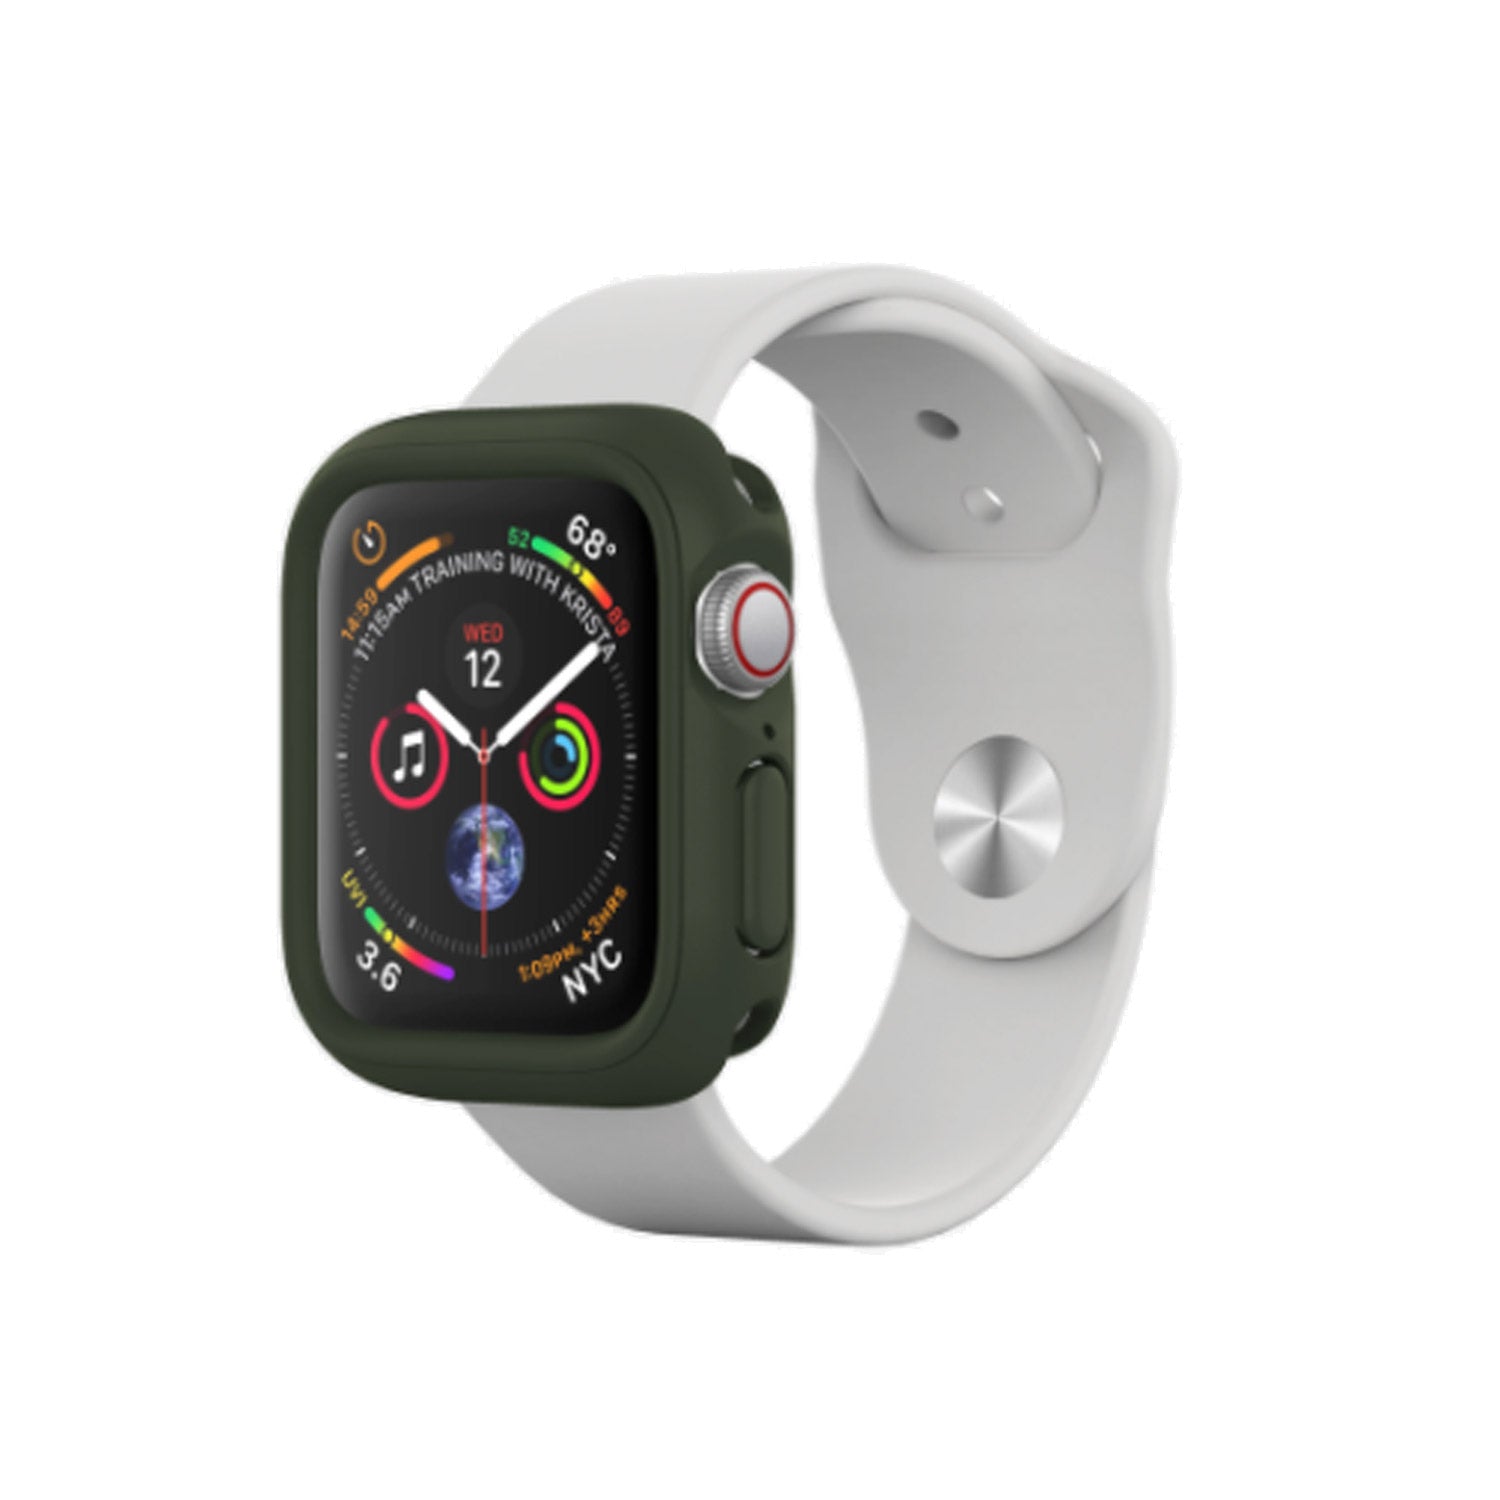 RhinoShield Apple Watch Series 1/2/3 CrashGuard NX Bumper Case & Rim 38mm Camo Green